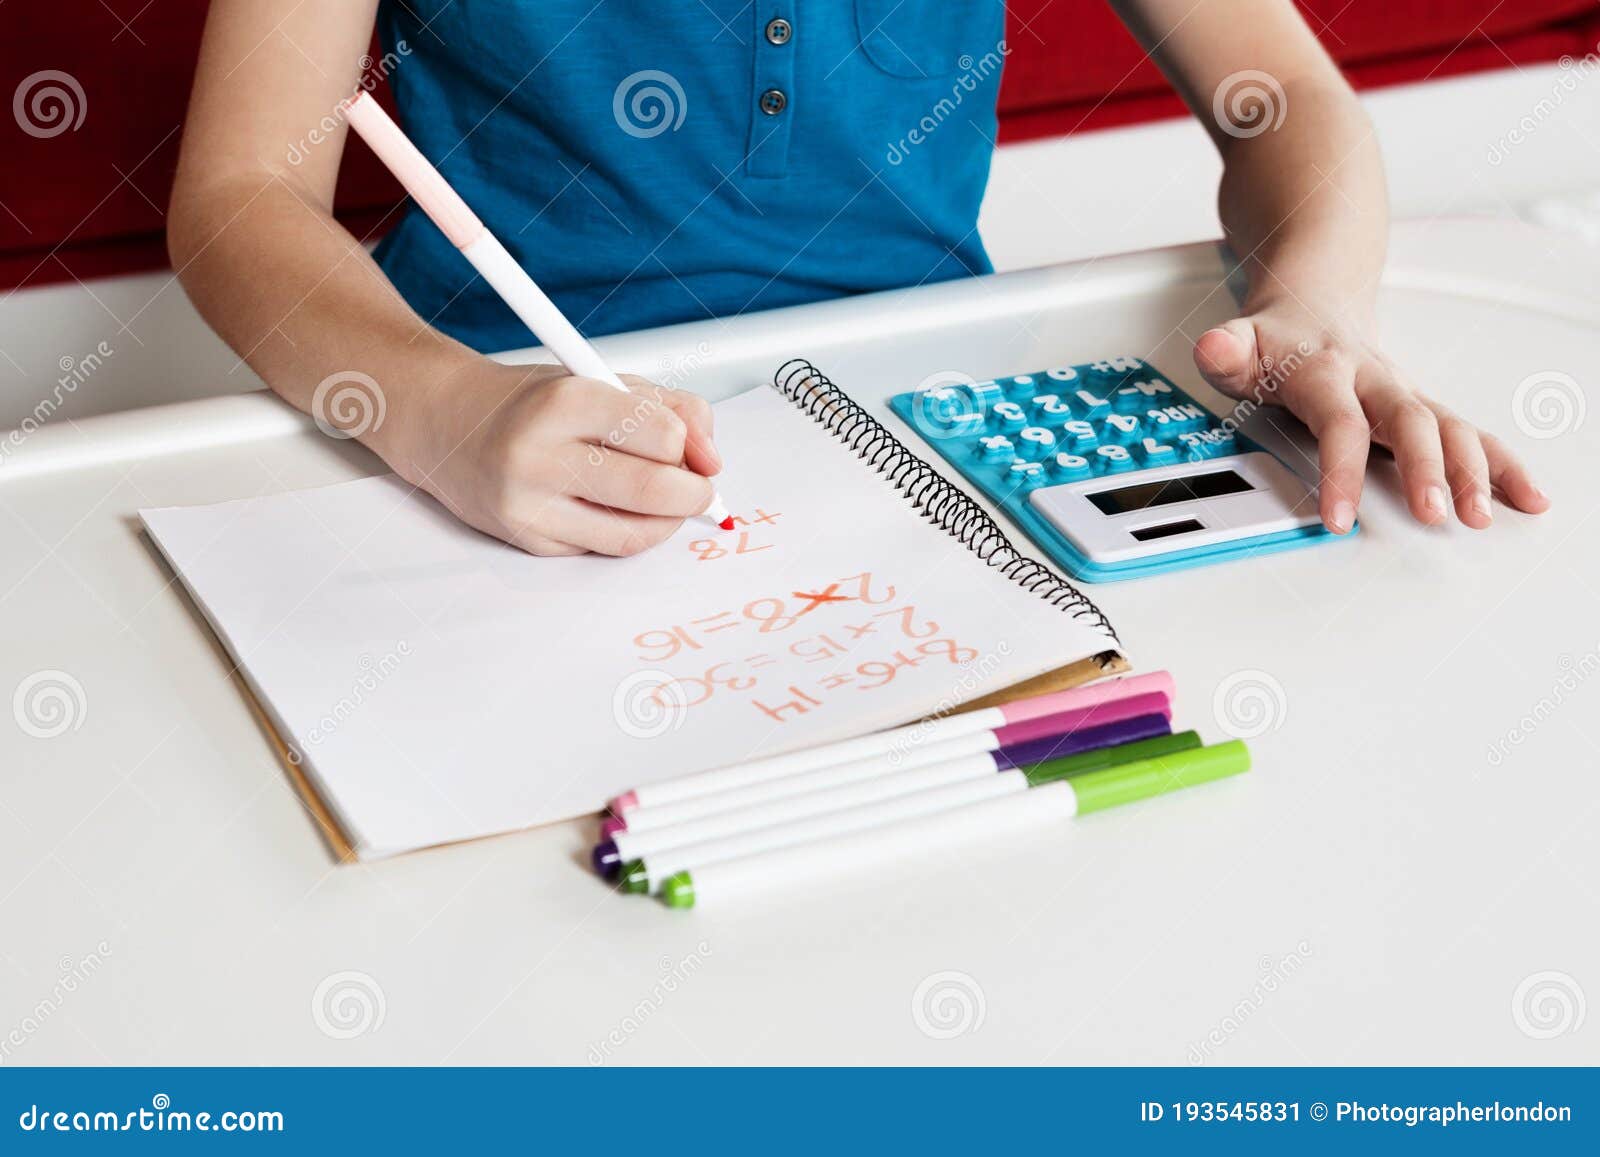 a homework calculator